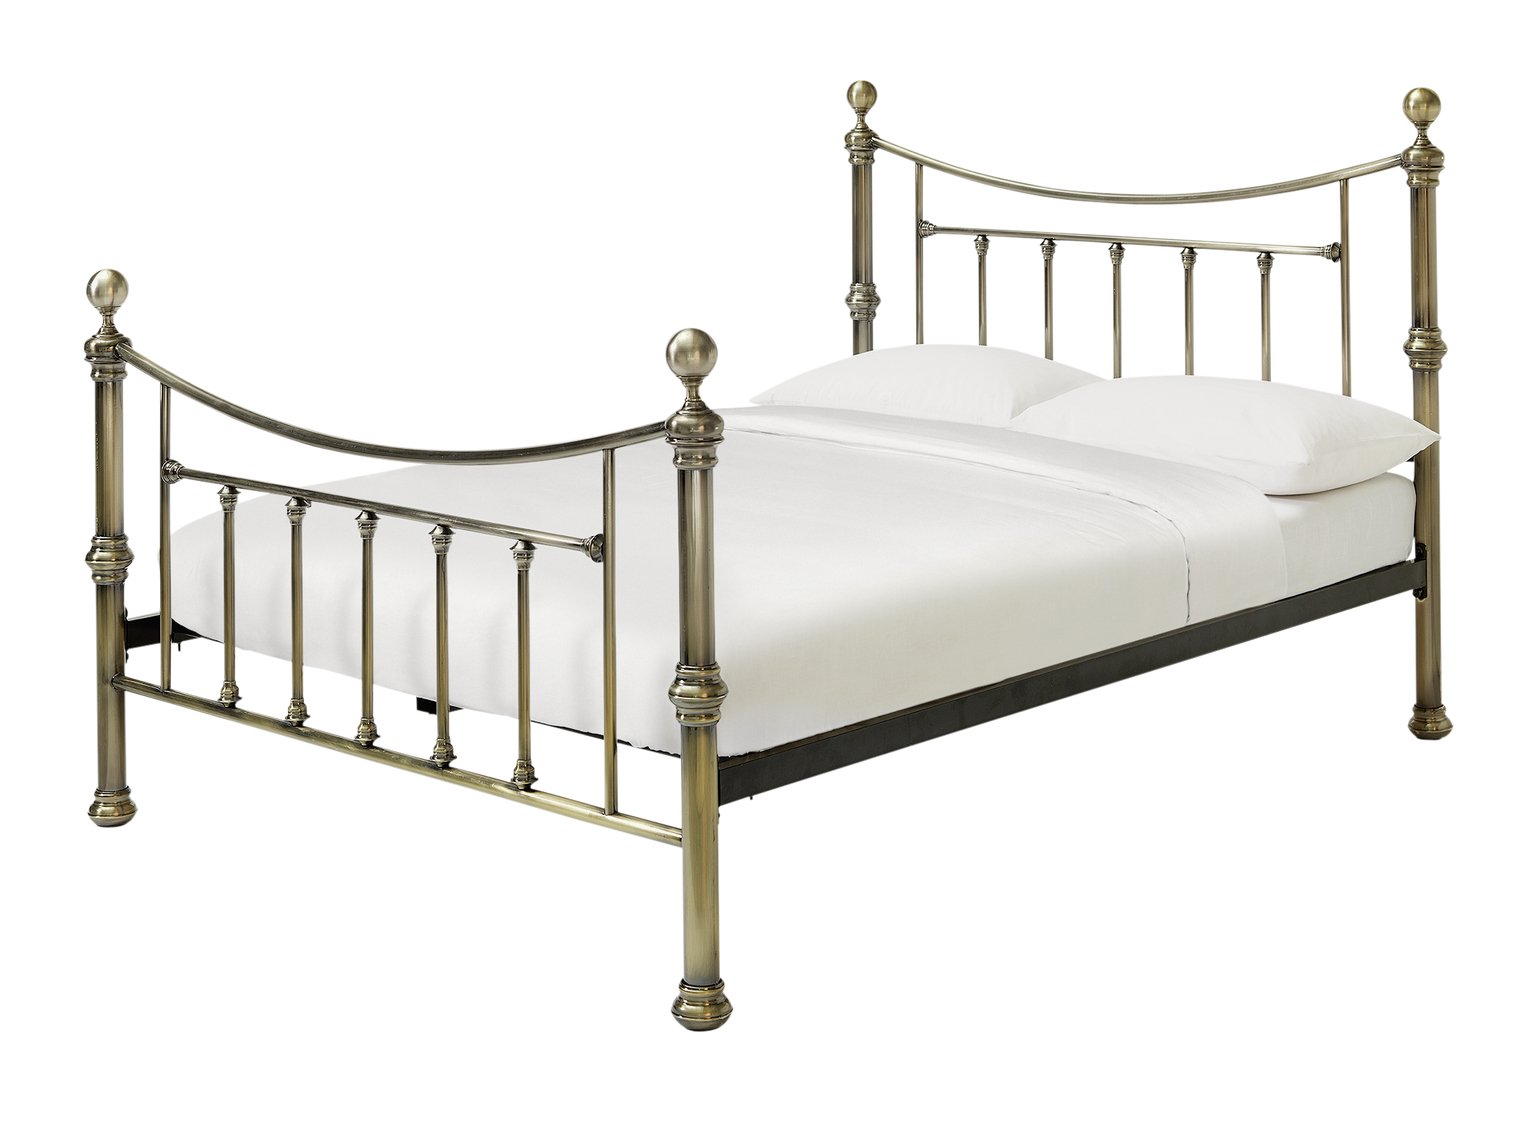 Argos Home Mason Double Metal Bed Frame - Antique Brass